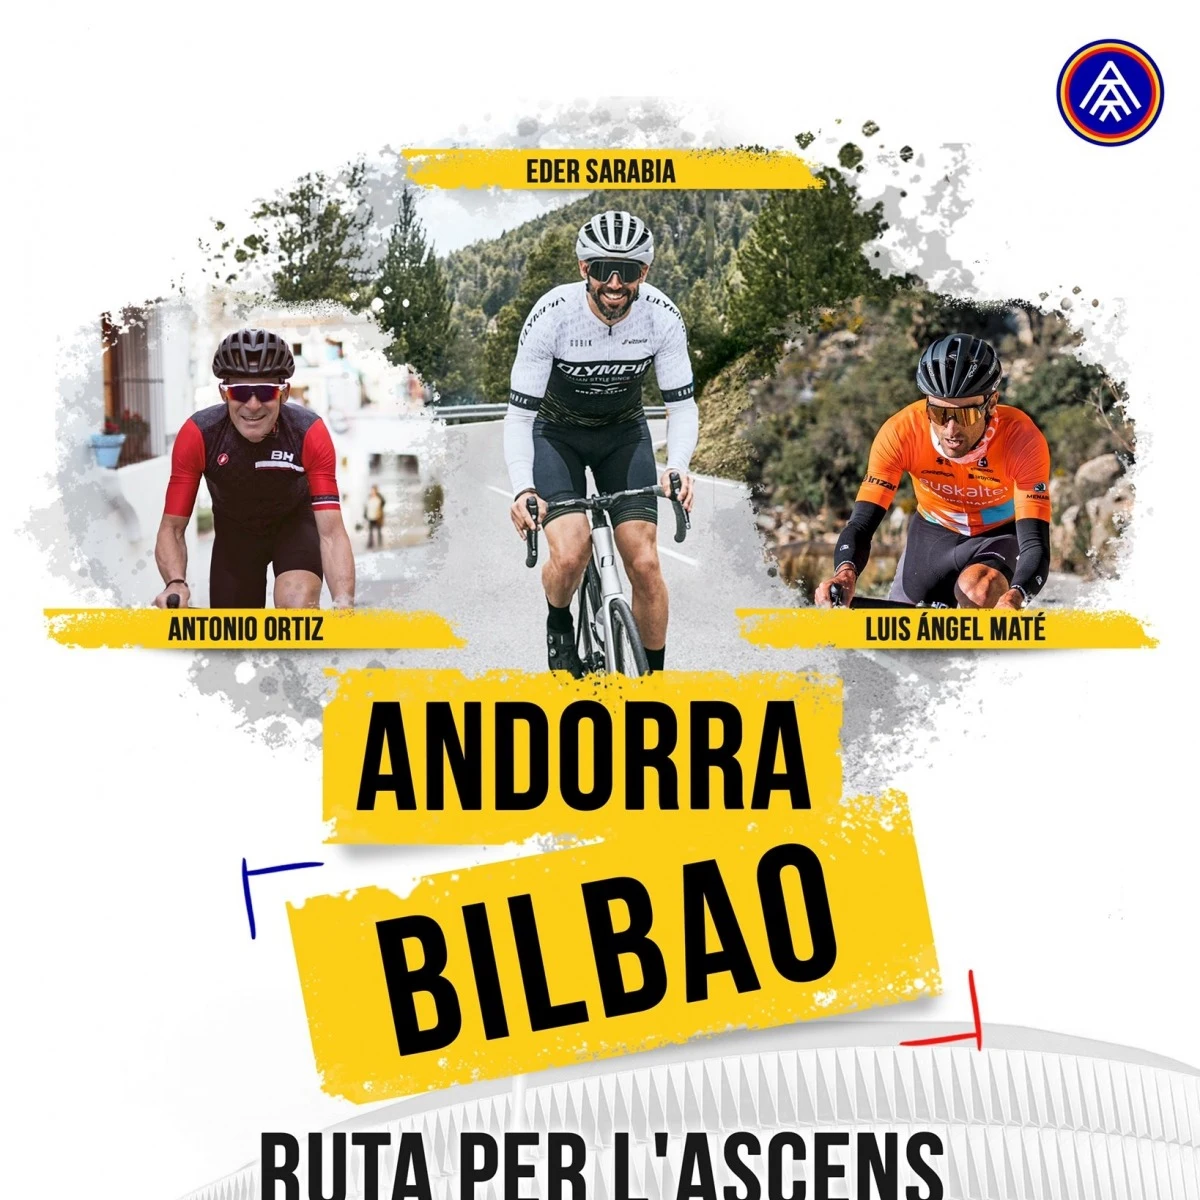 La promesa de Eder Sarabia tras el ascenso: de Andorra a Bilbao bici | Onda Cero